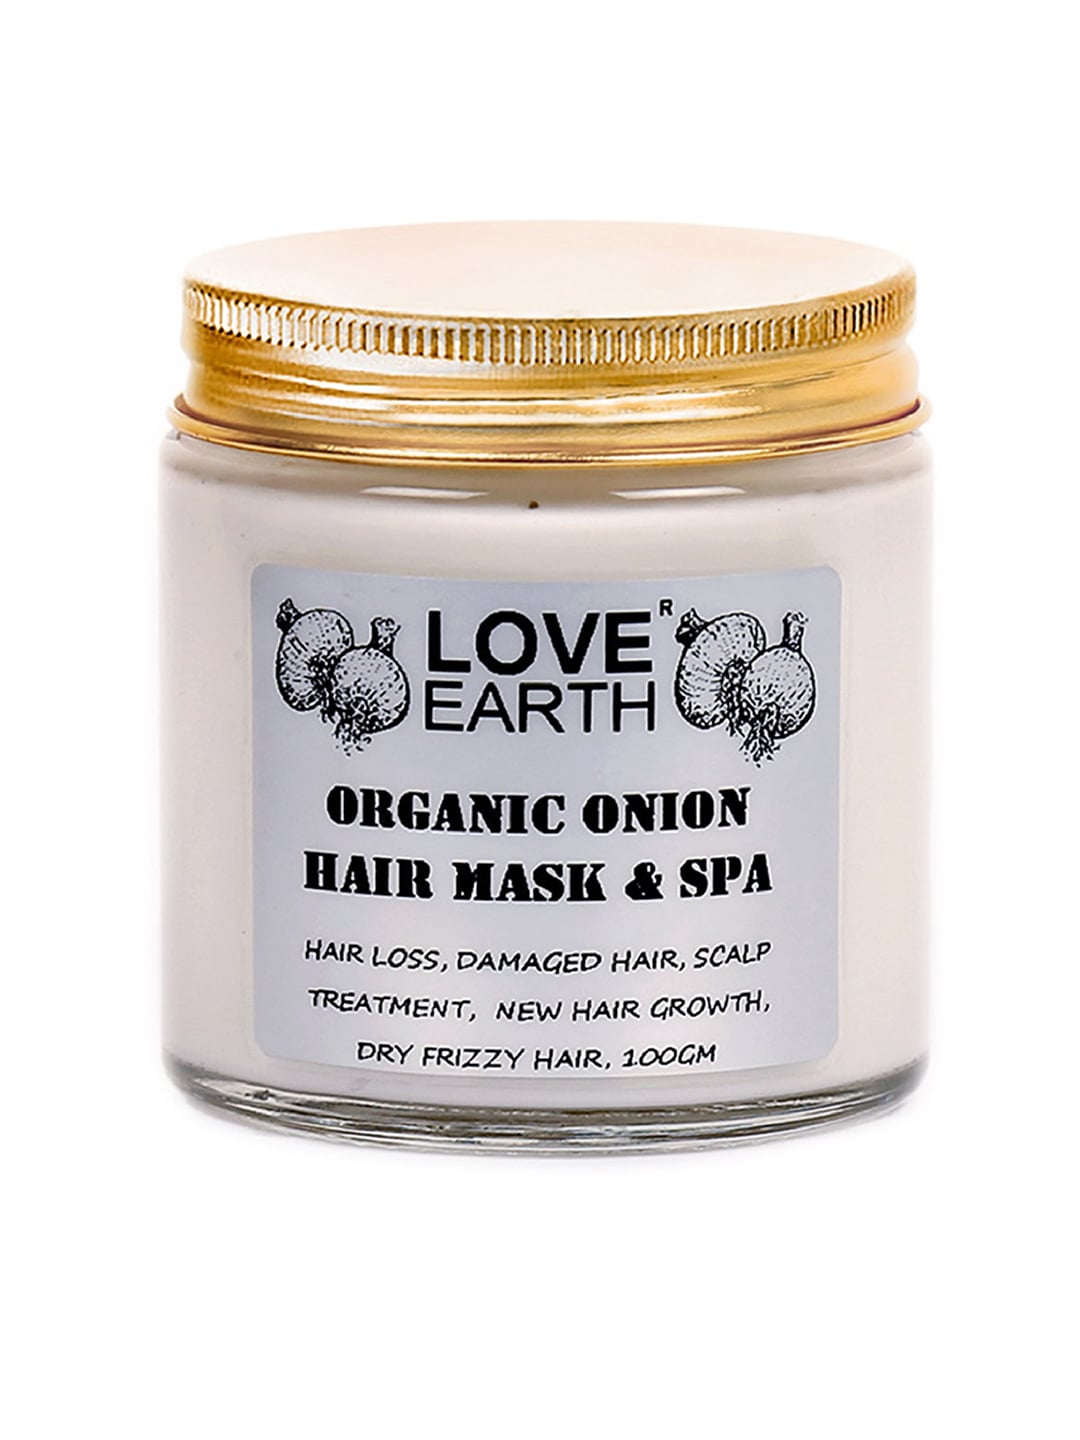 LOVE EARTH Organic Onion Hair Mask & Spa - 100g Price in India